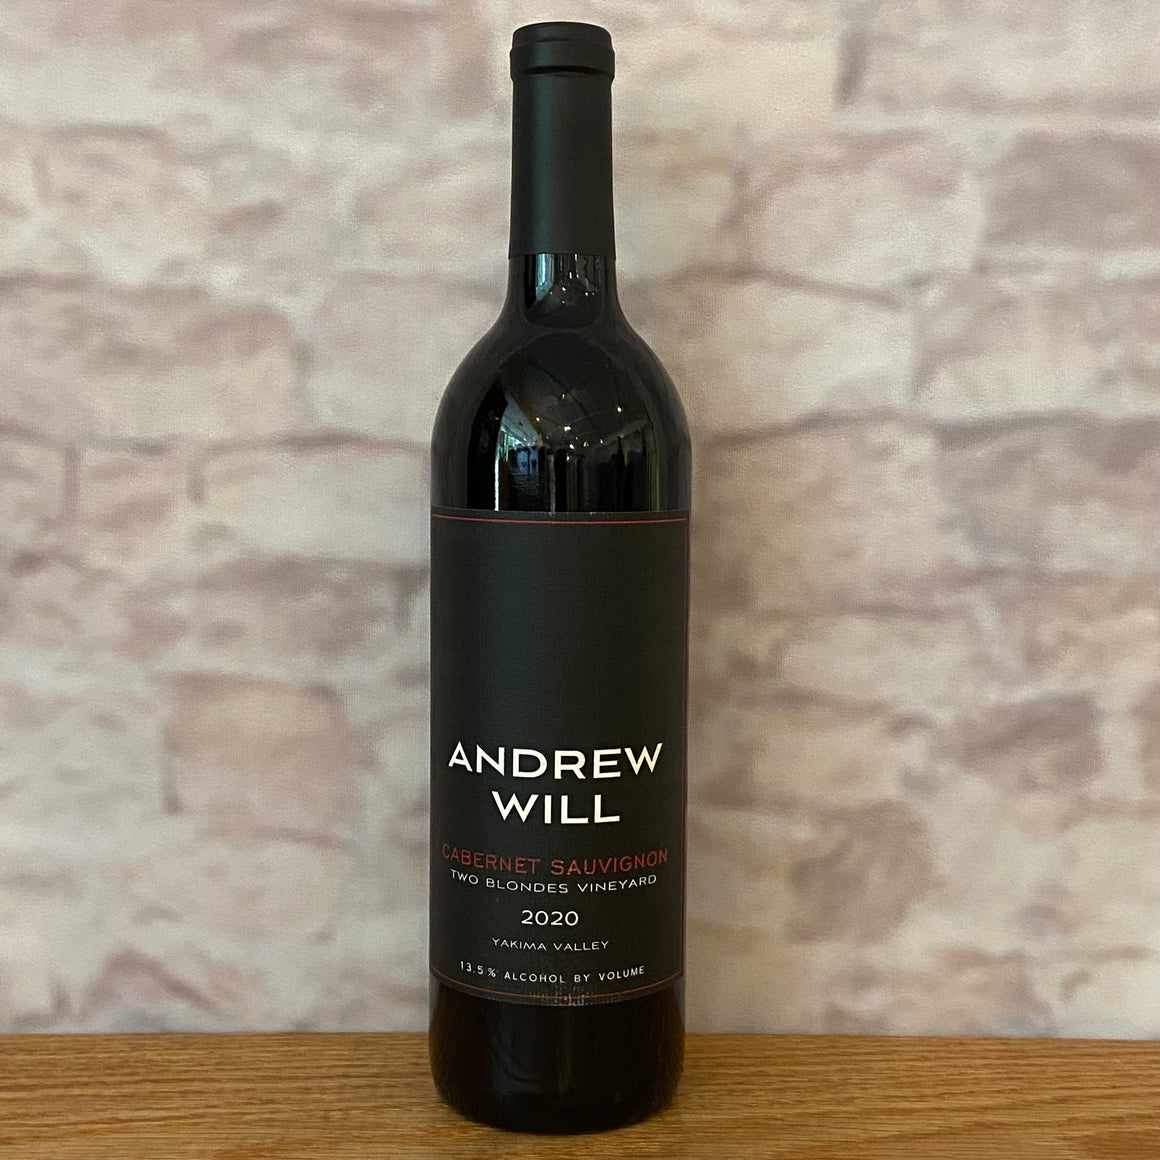 Andrew Will Sorella | Champoux Vineyard 2018 / 750 ml.